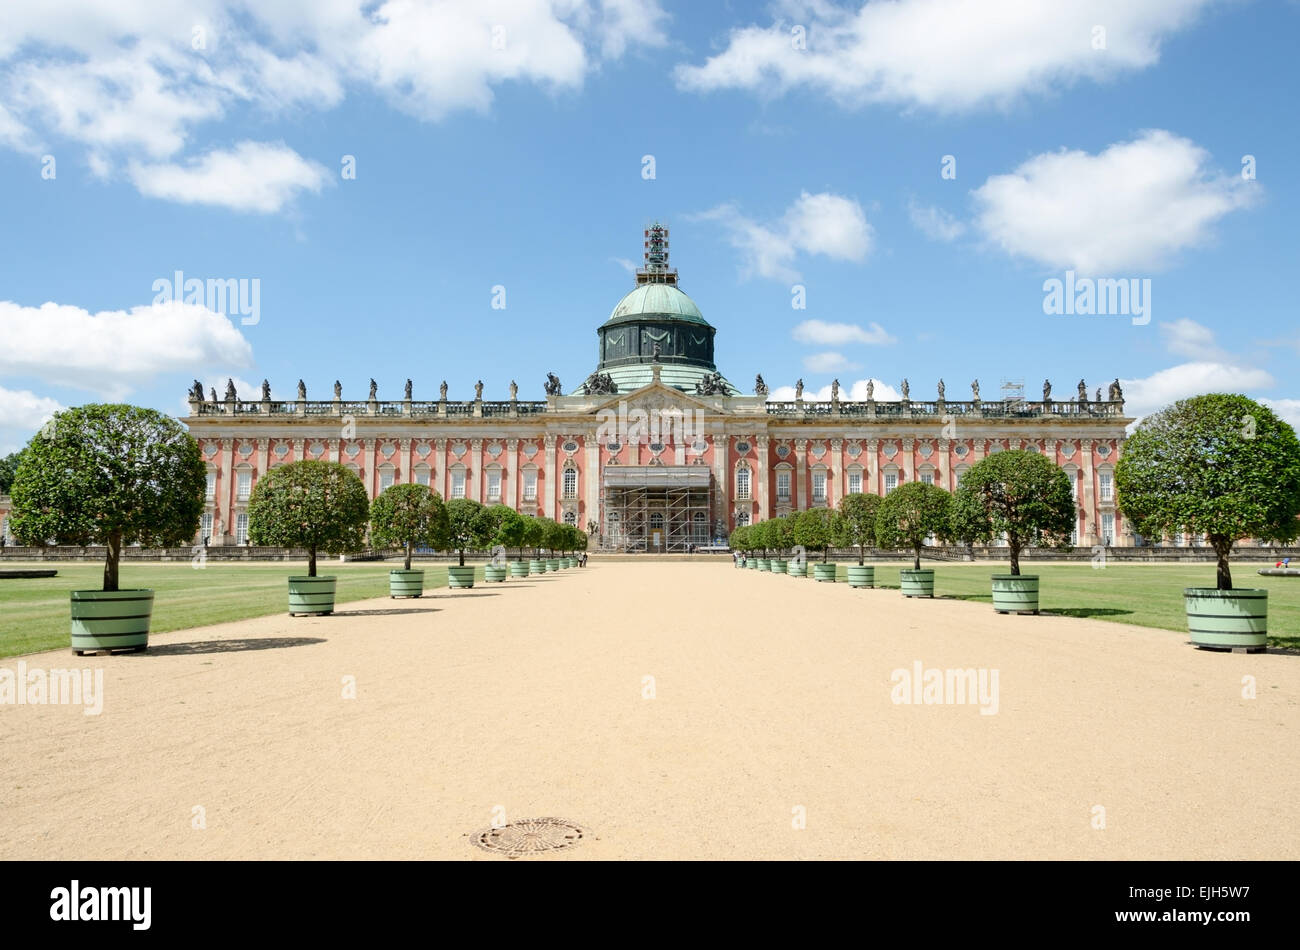 New Palace in Sanssouci Park, Potsdam, Germany Stock Photo